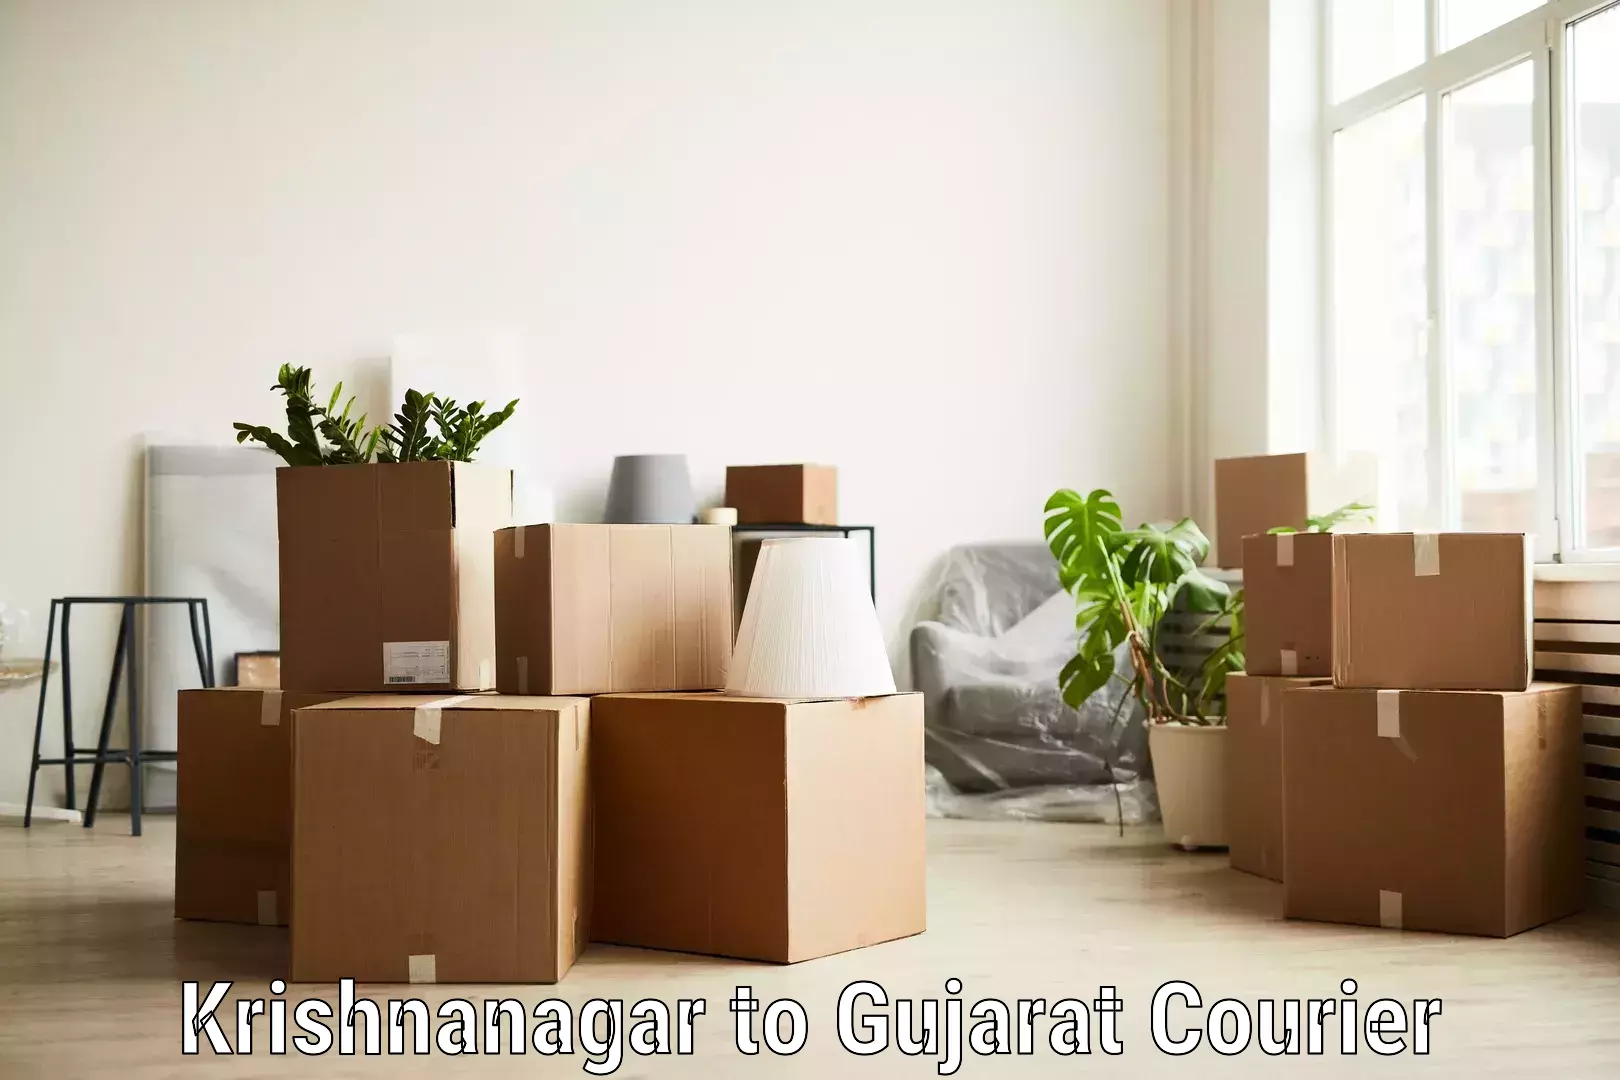 Global courier networks Krishnanagar to Ahmedabad